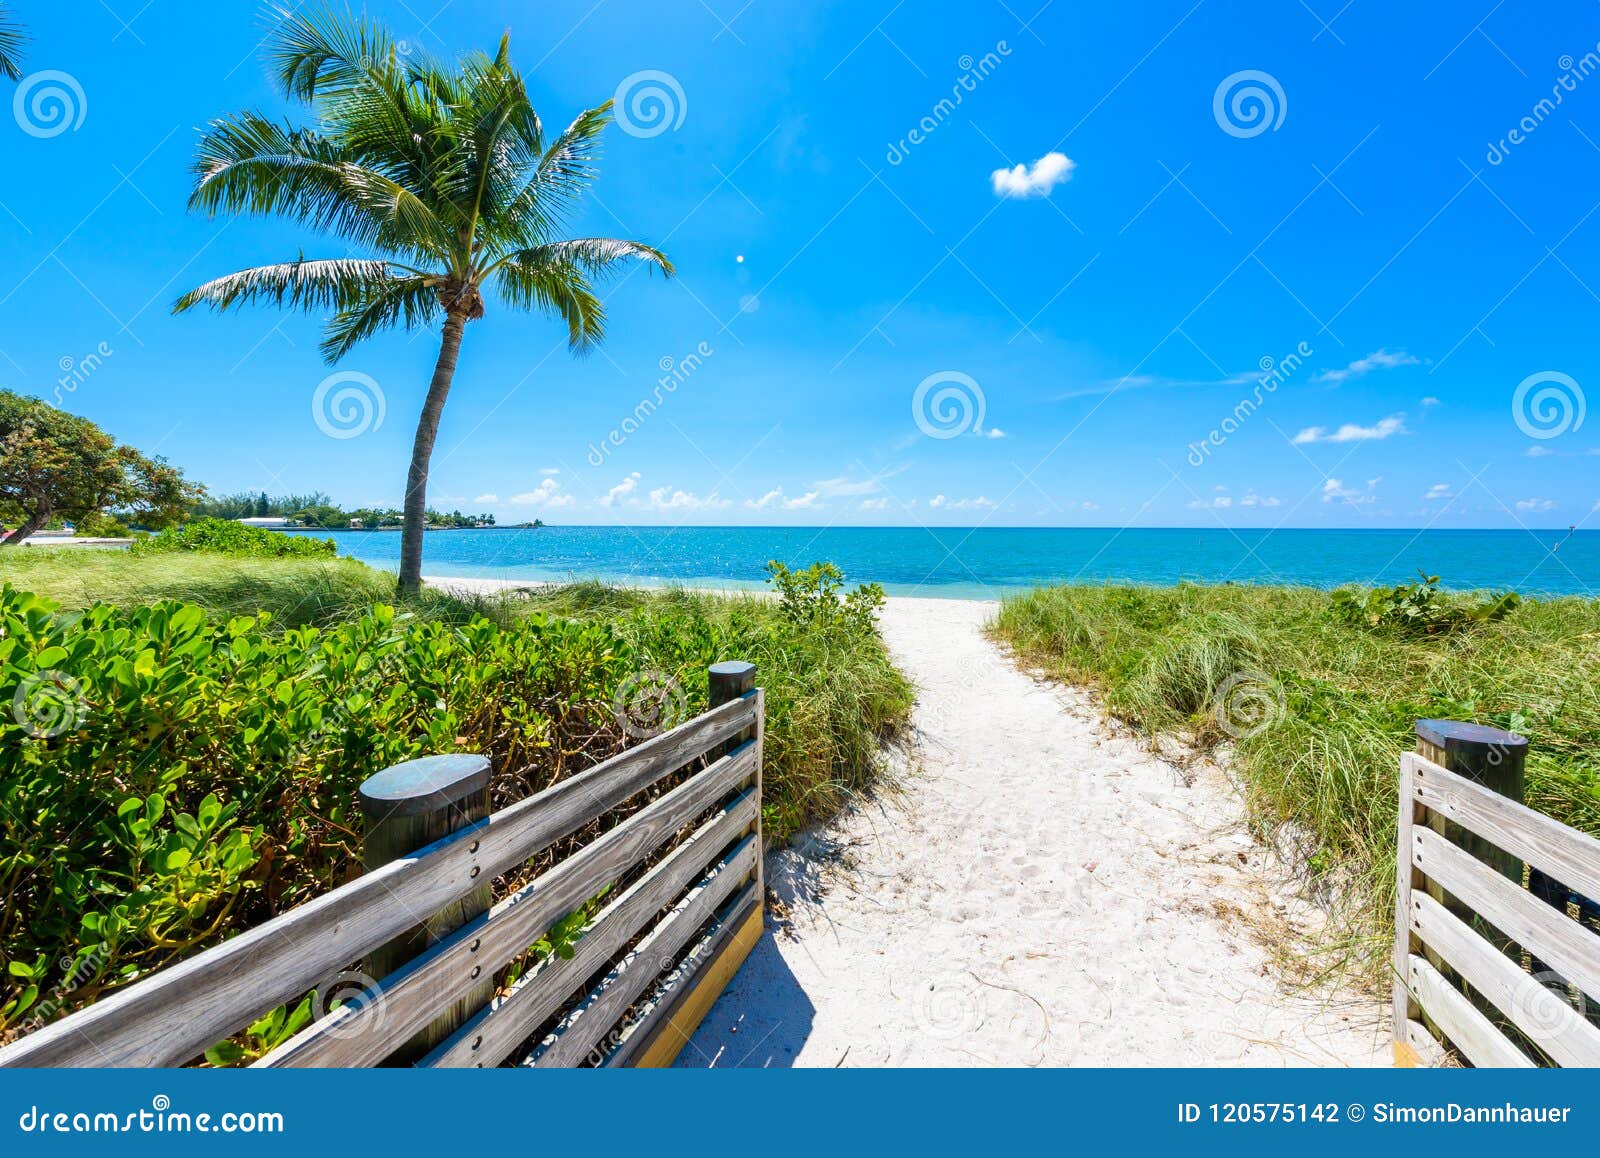 sombrero beach with palm trees on the florida keys, marathon, fl